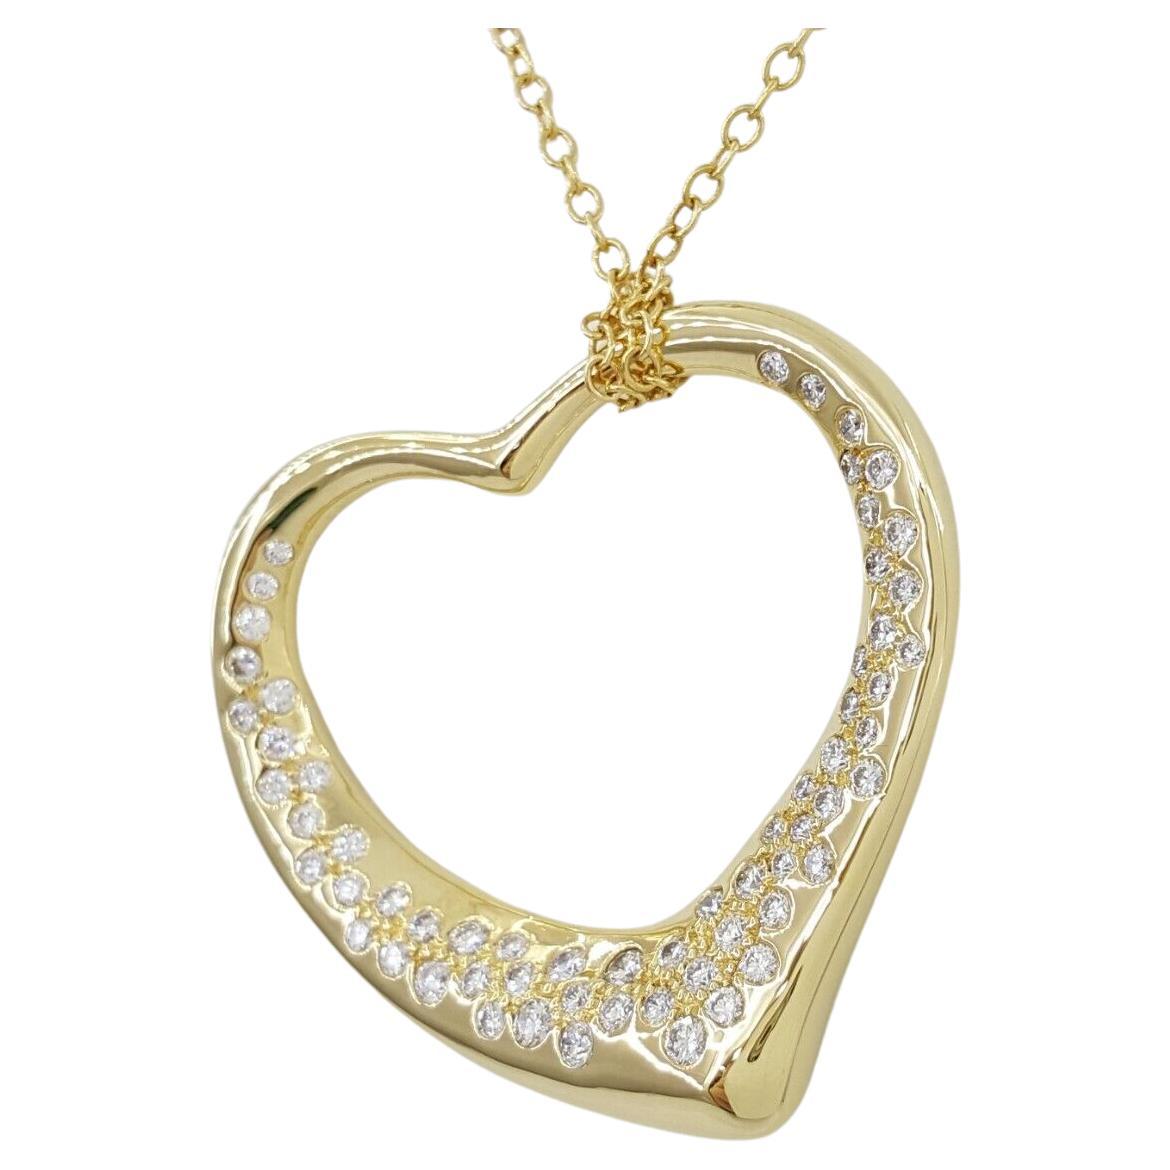 Tiffany & Co. 18K Yellow Gold Diamond Large Open Heart Pendant